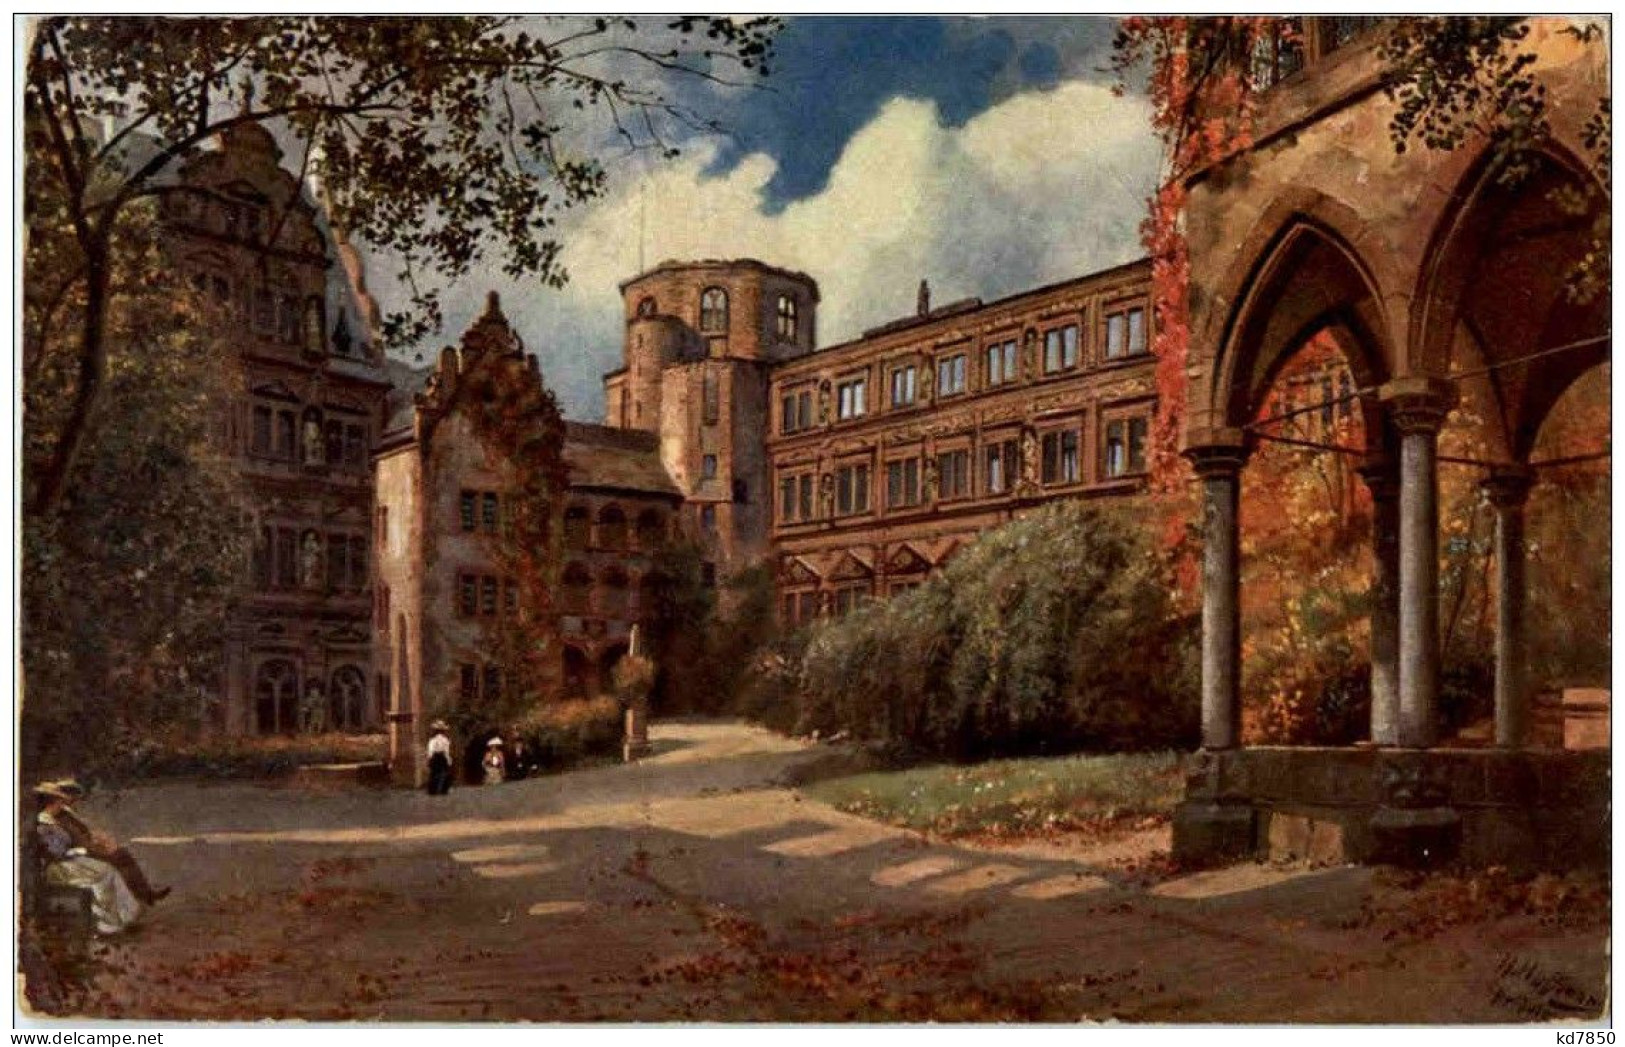 Heiudelberg Schloss - H. Hoffmann - Heidelberg